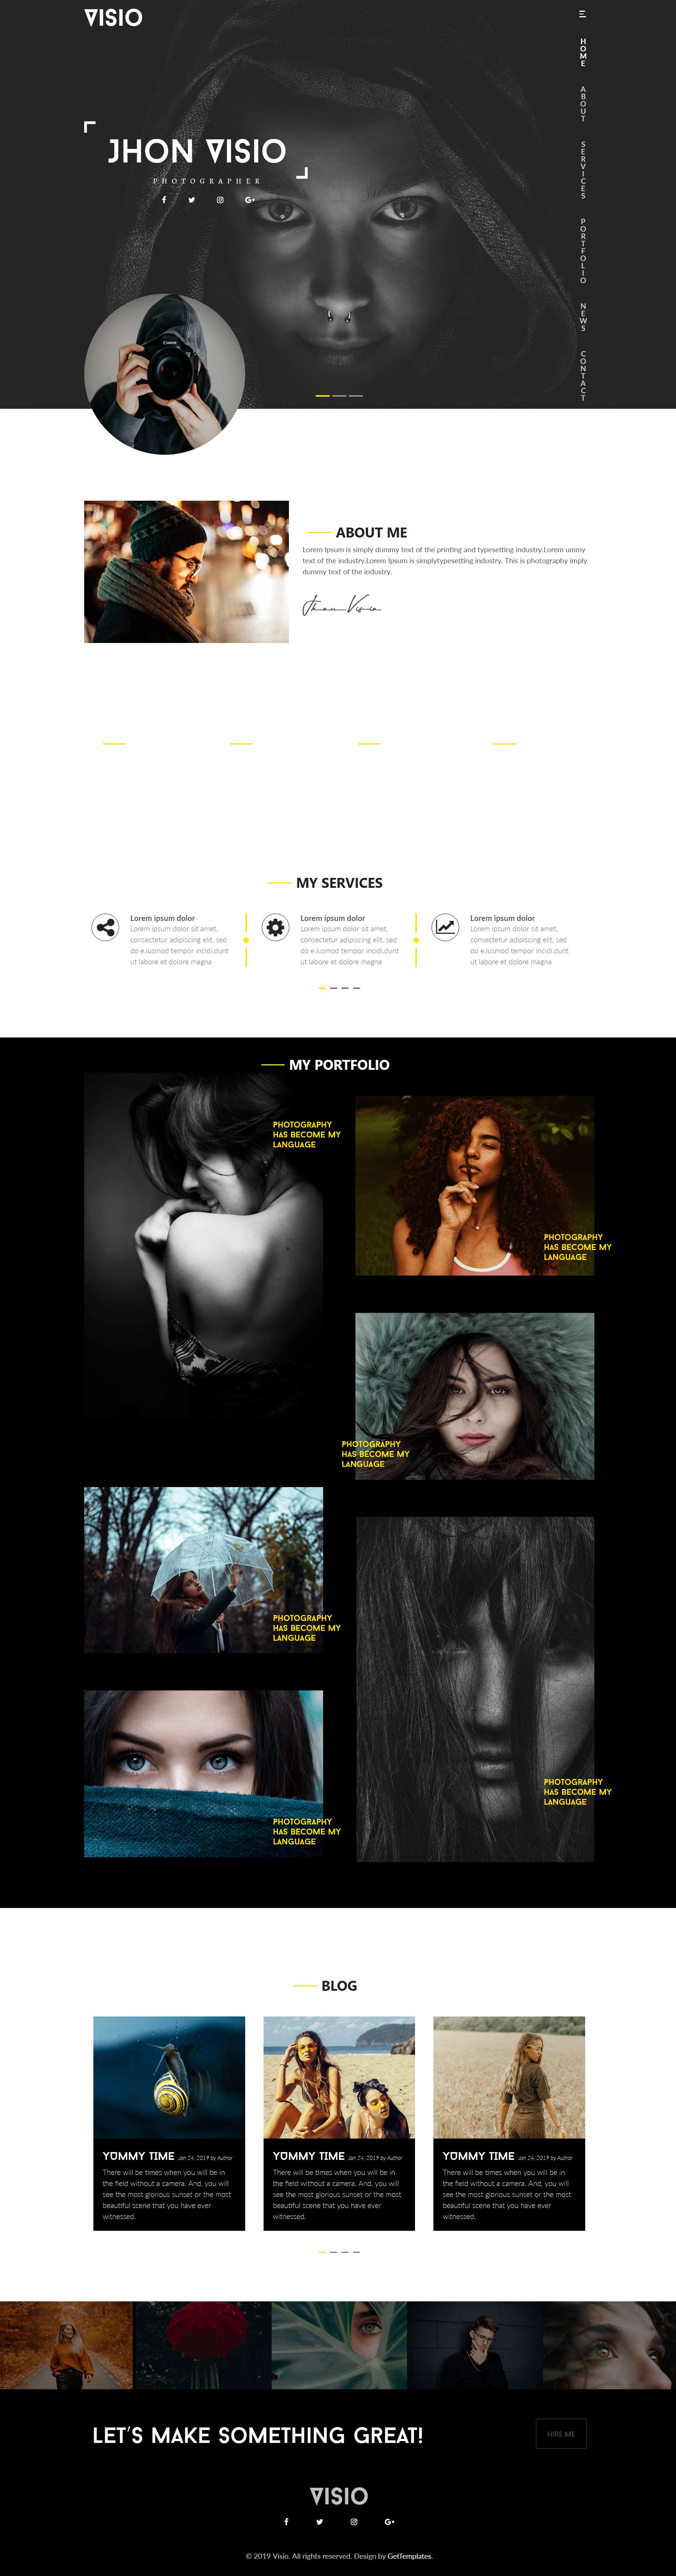 HTML5黄色宽屏样式人物艺术摄影网页模板代码下载